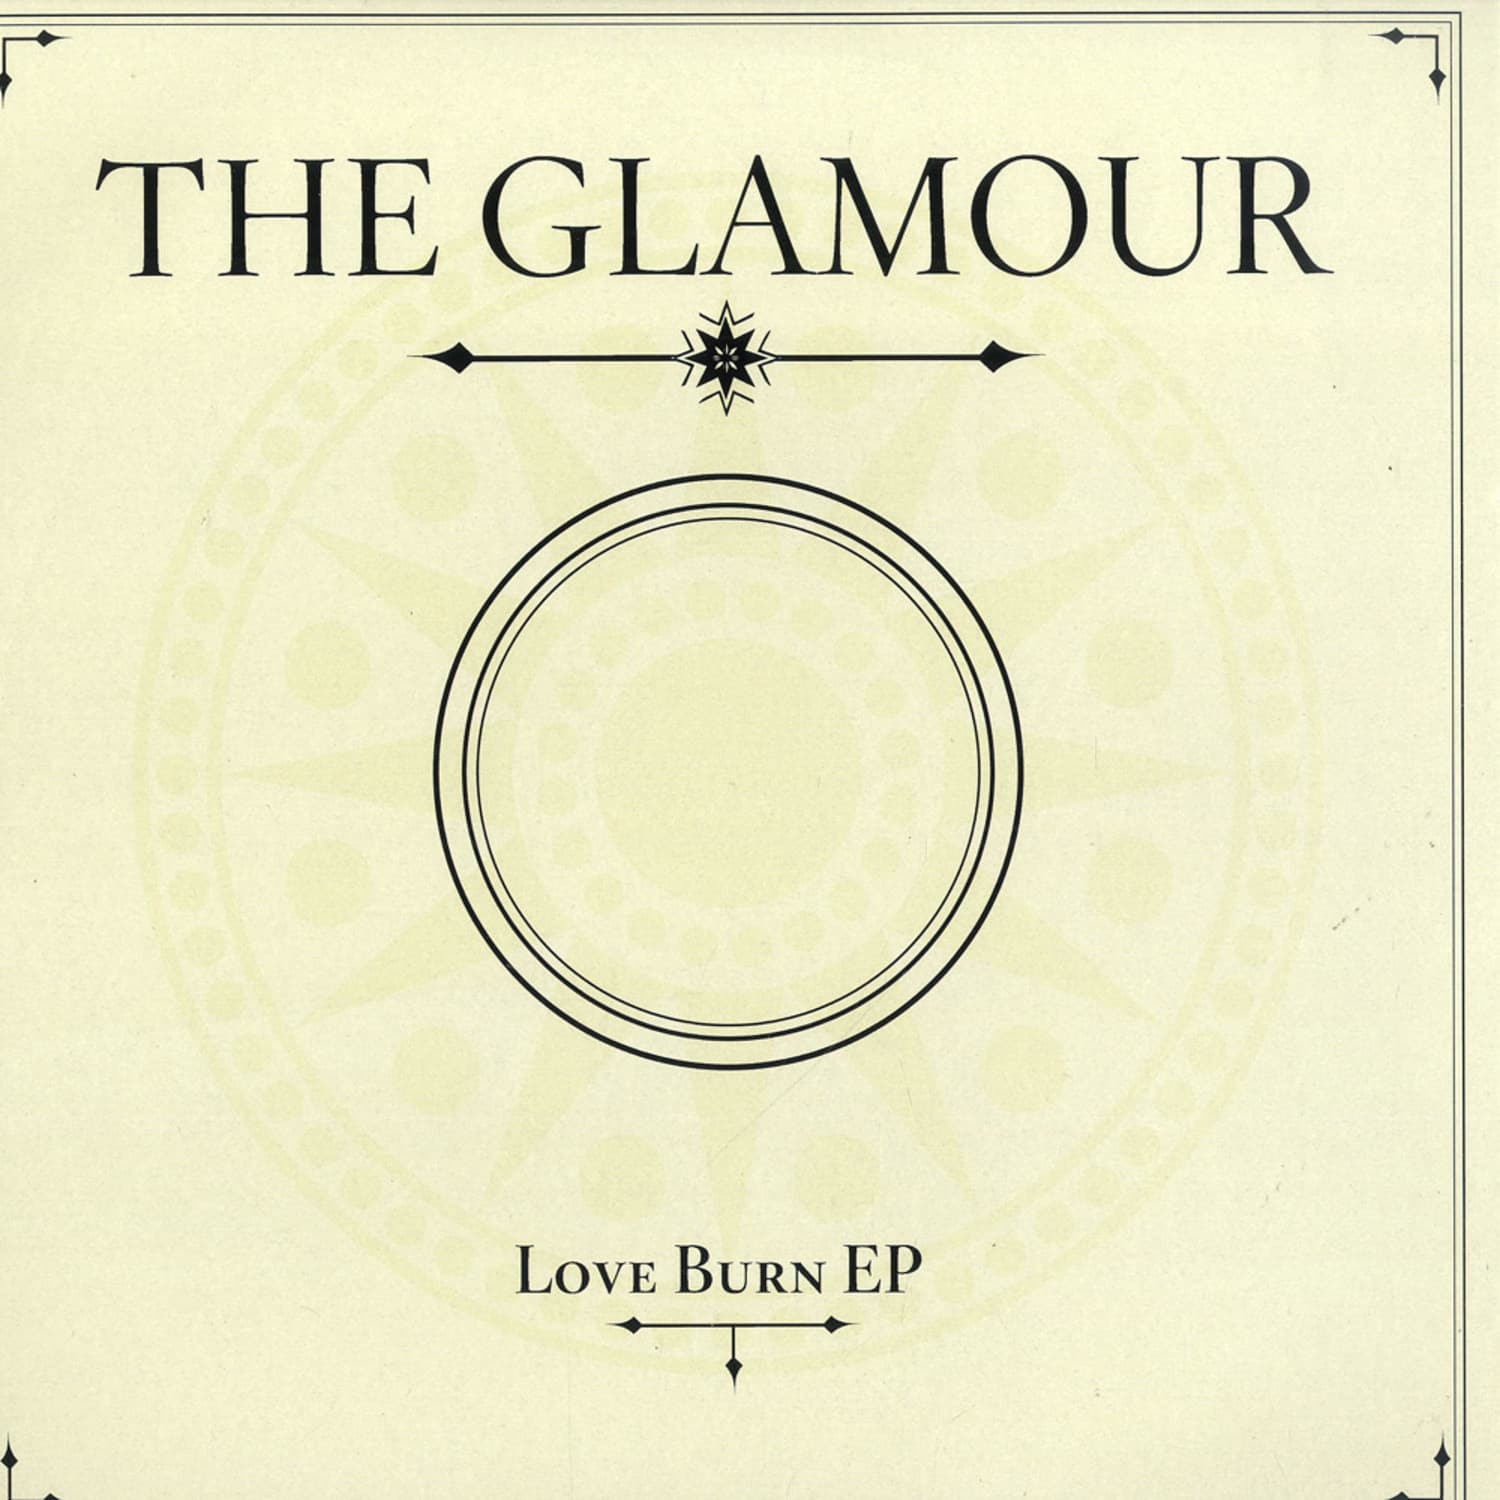 The Glamour - LOVE BURN EP